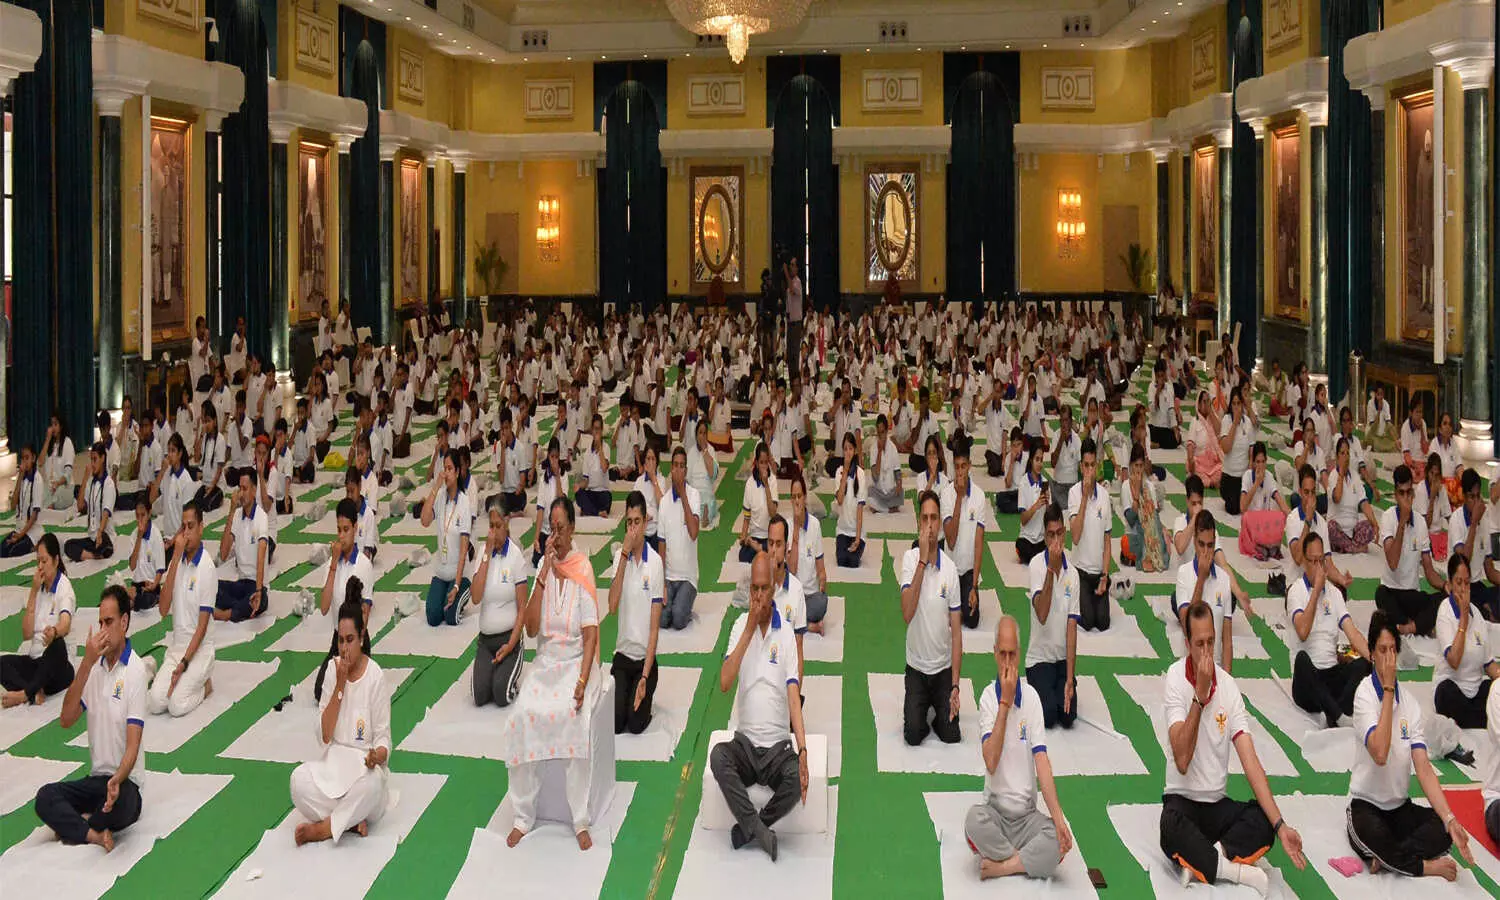 International Yoga Day updates  Yoga India's gift to humanity